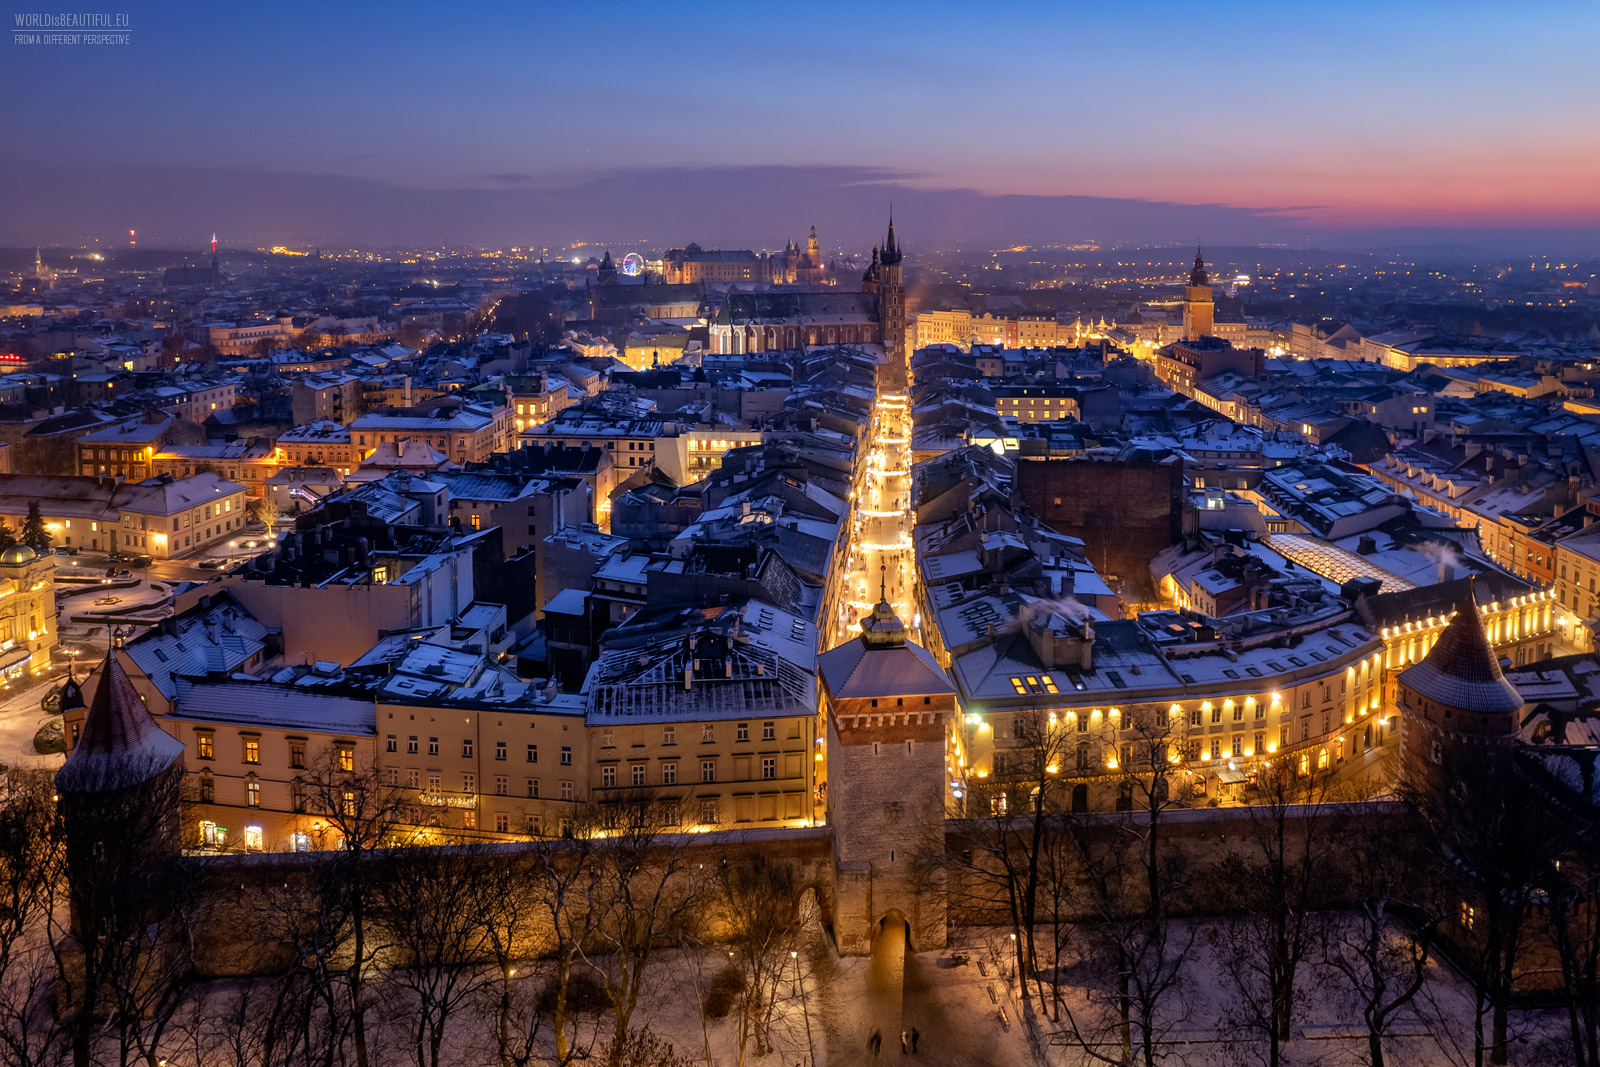 The night panorama of Krakow